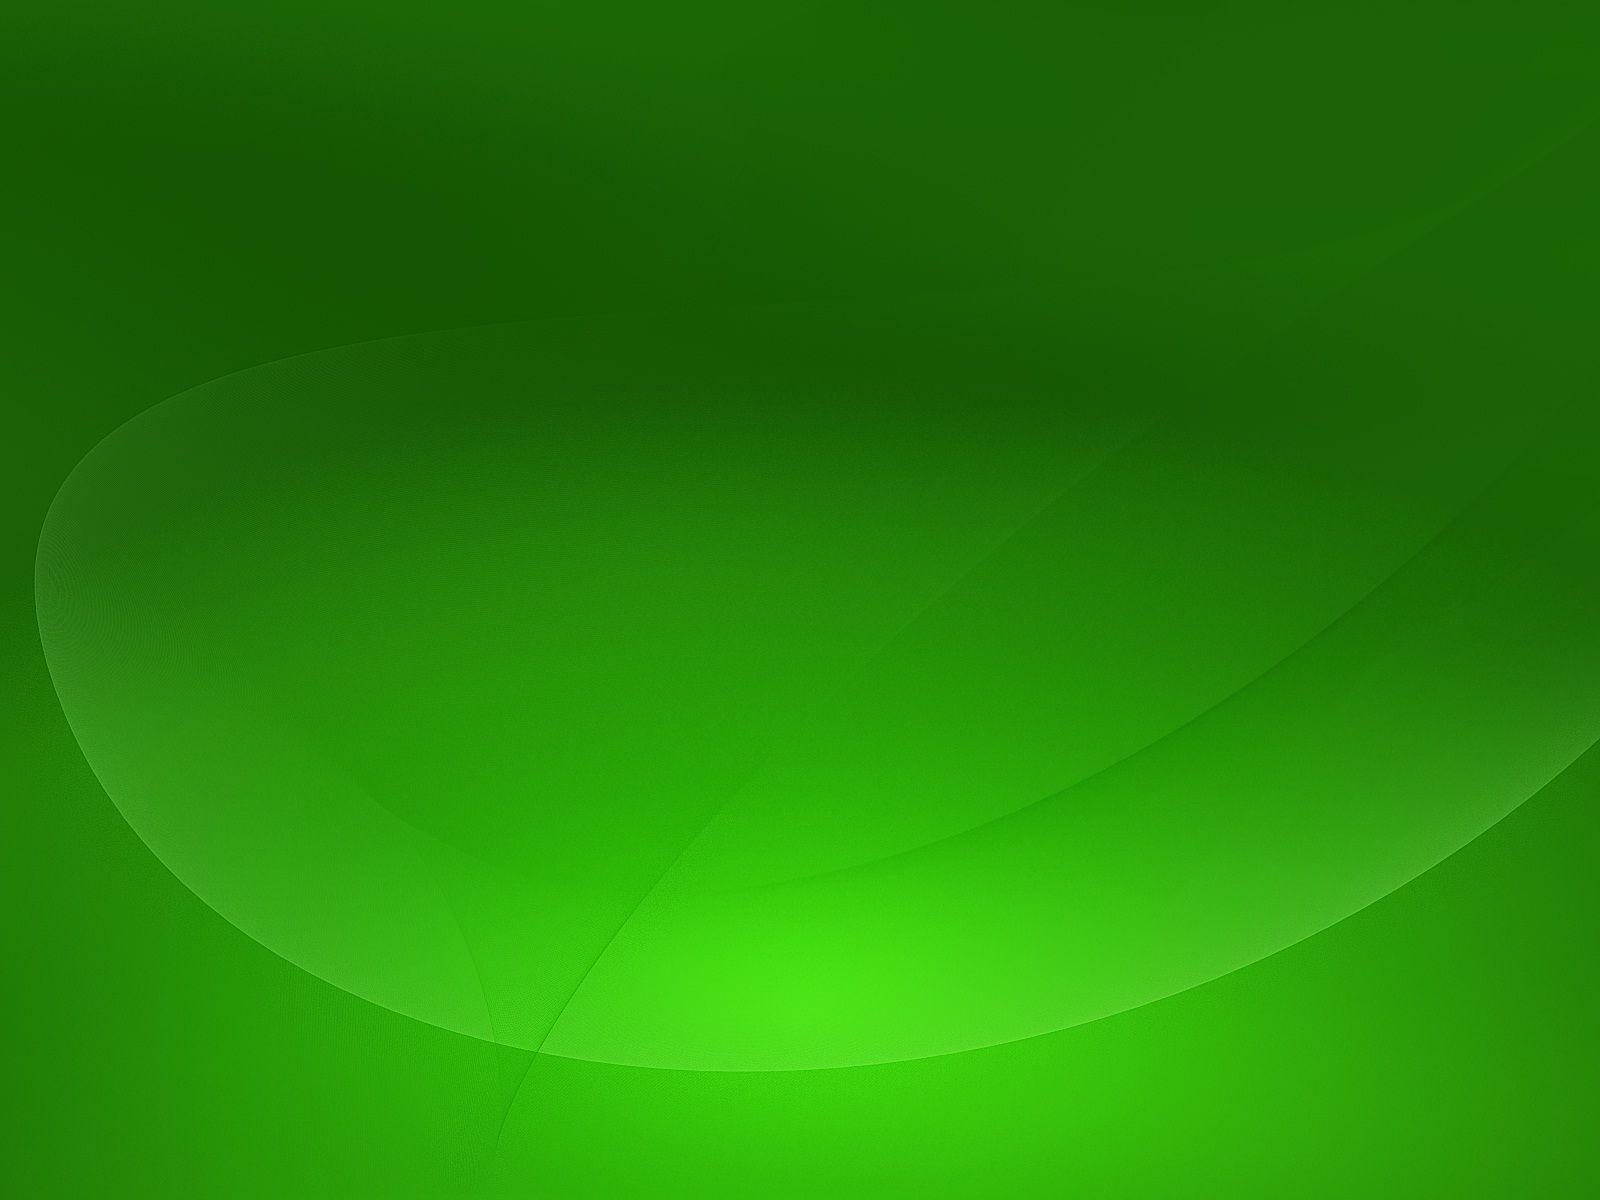 Green Colour Hd Wallpaper For Mobile